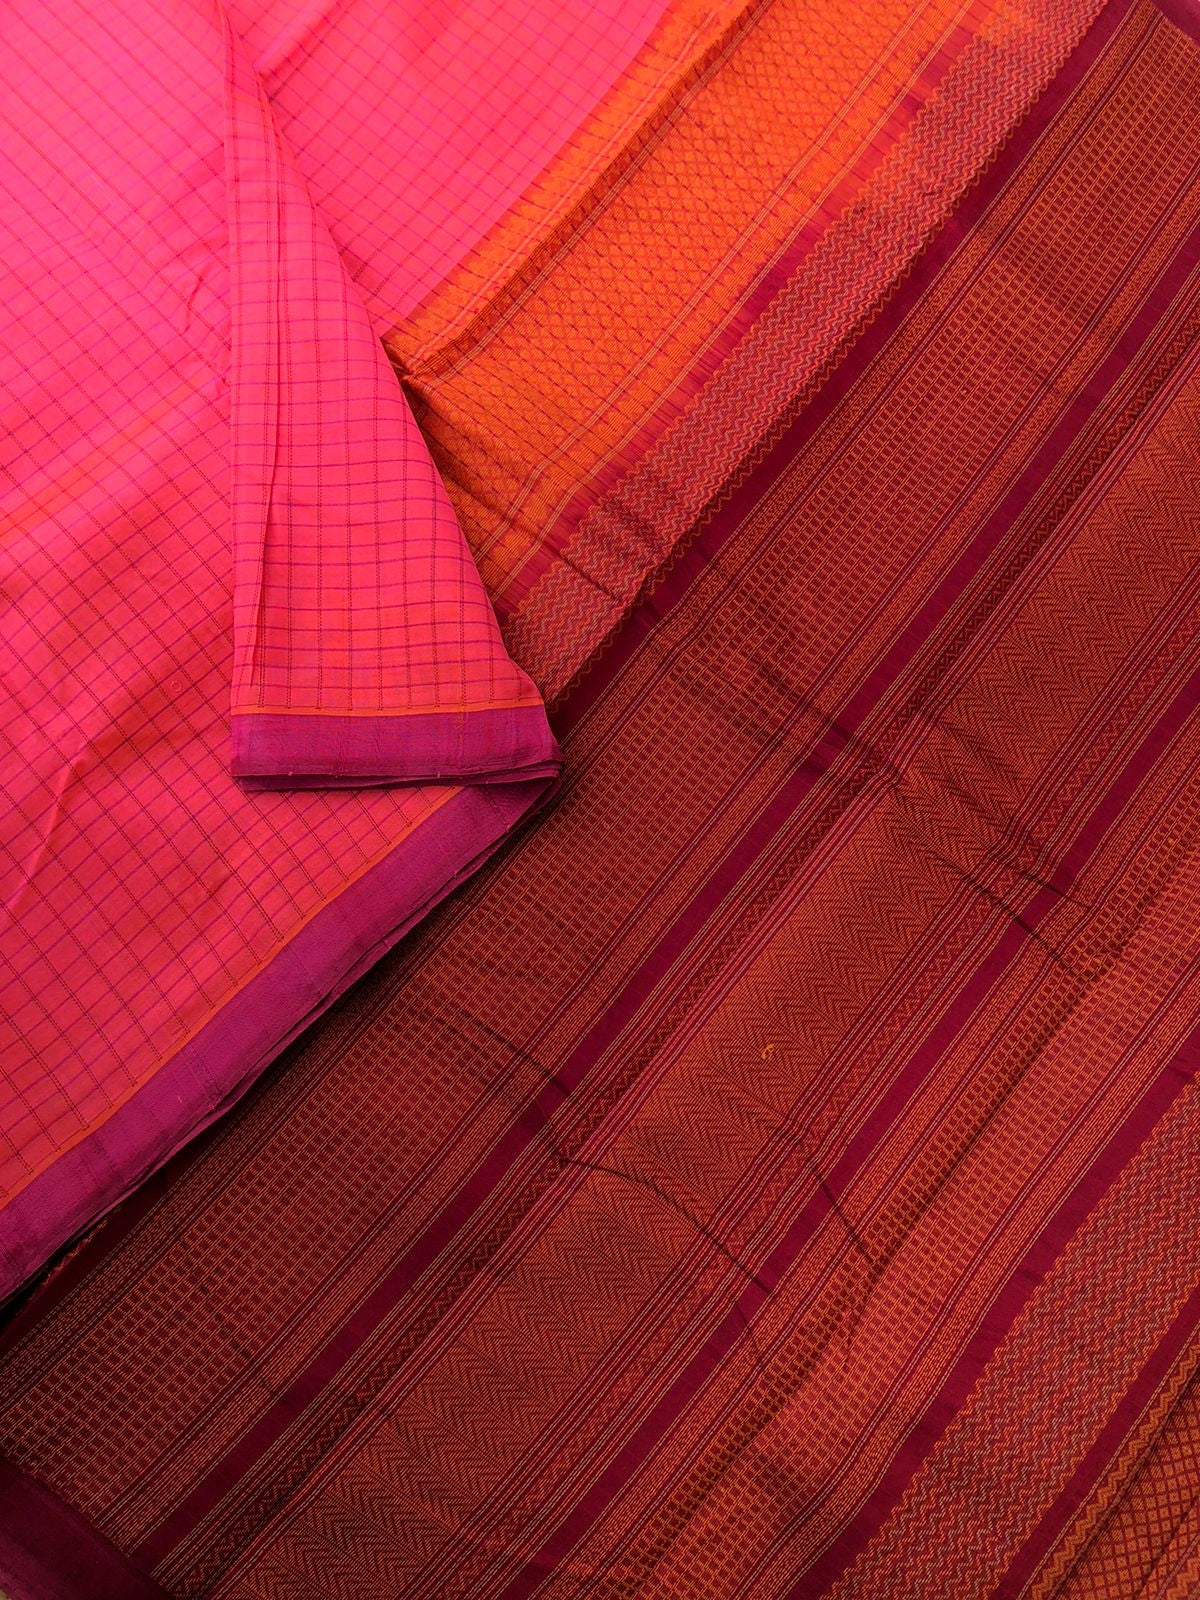 Woven Motifs Silk Cotton - bubble gum pink and maroon podi kattam